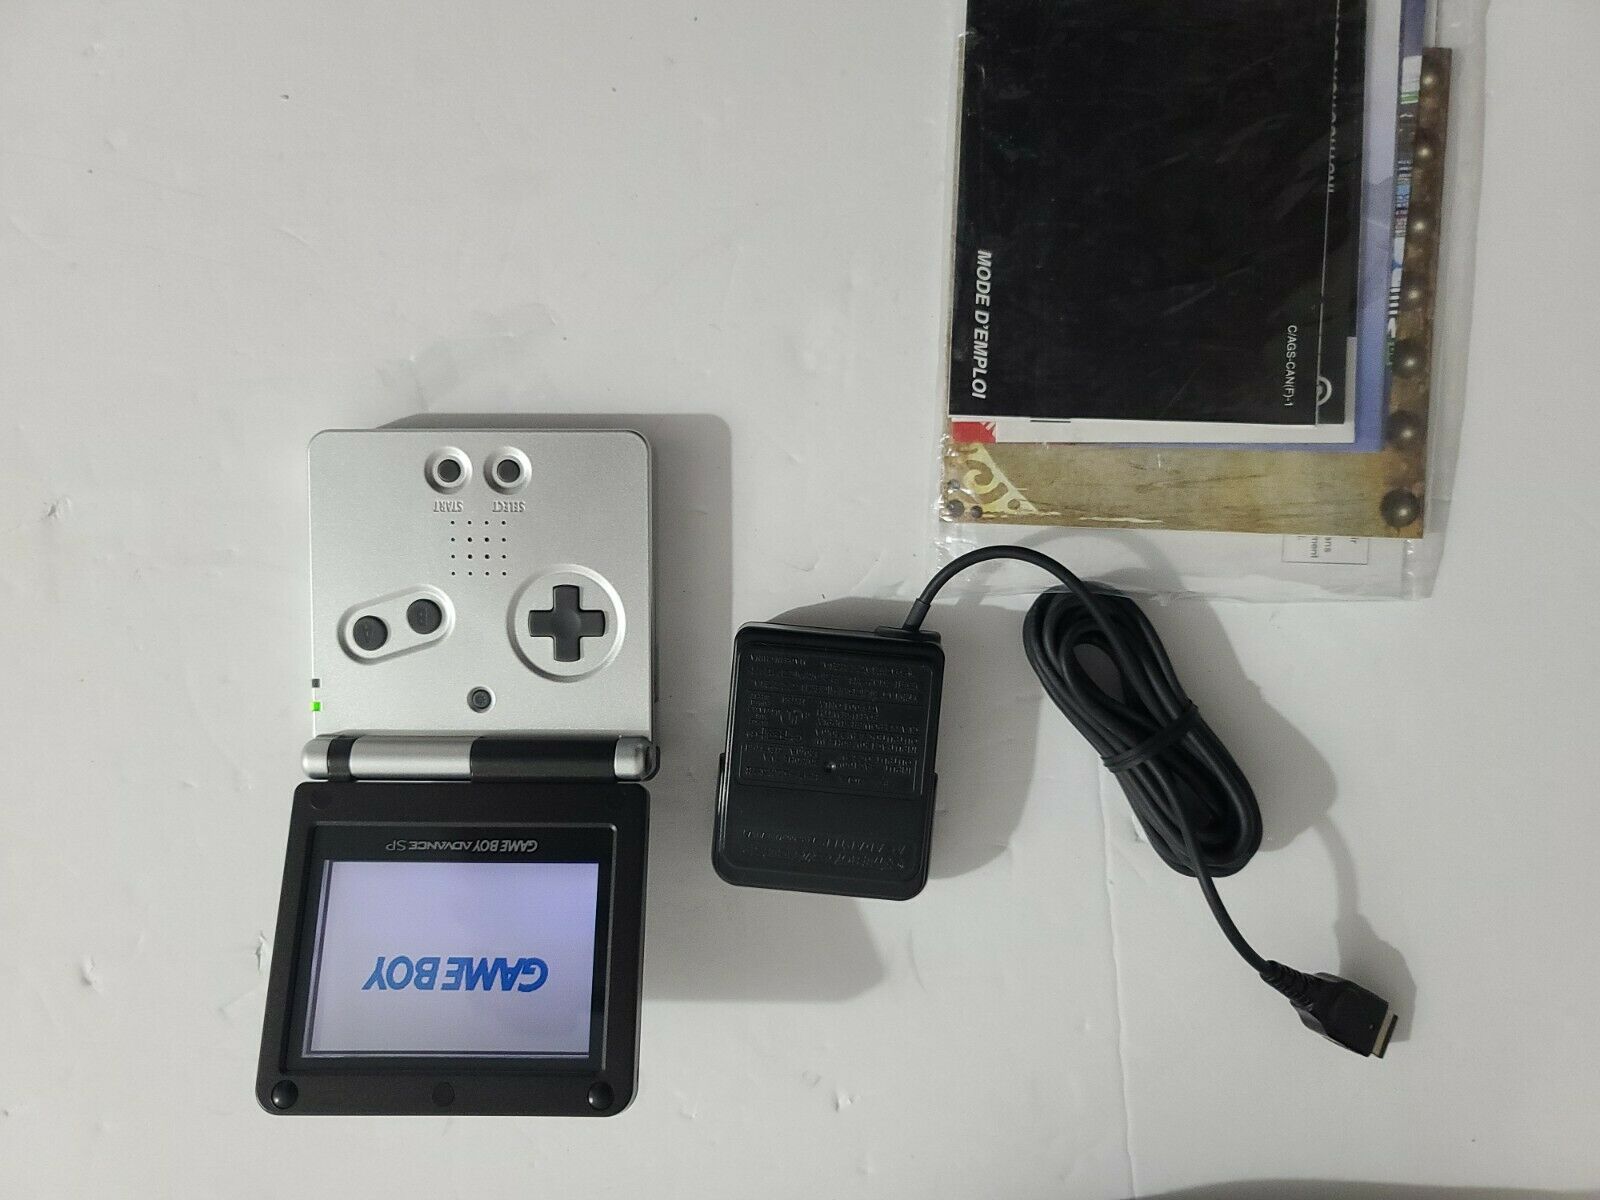 Game Boy Advance SP Platinum/Onyx